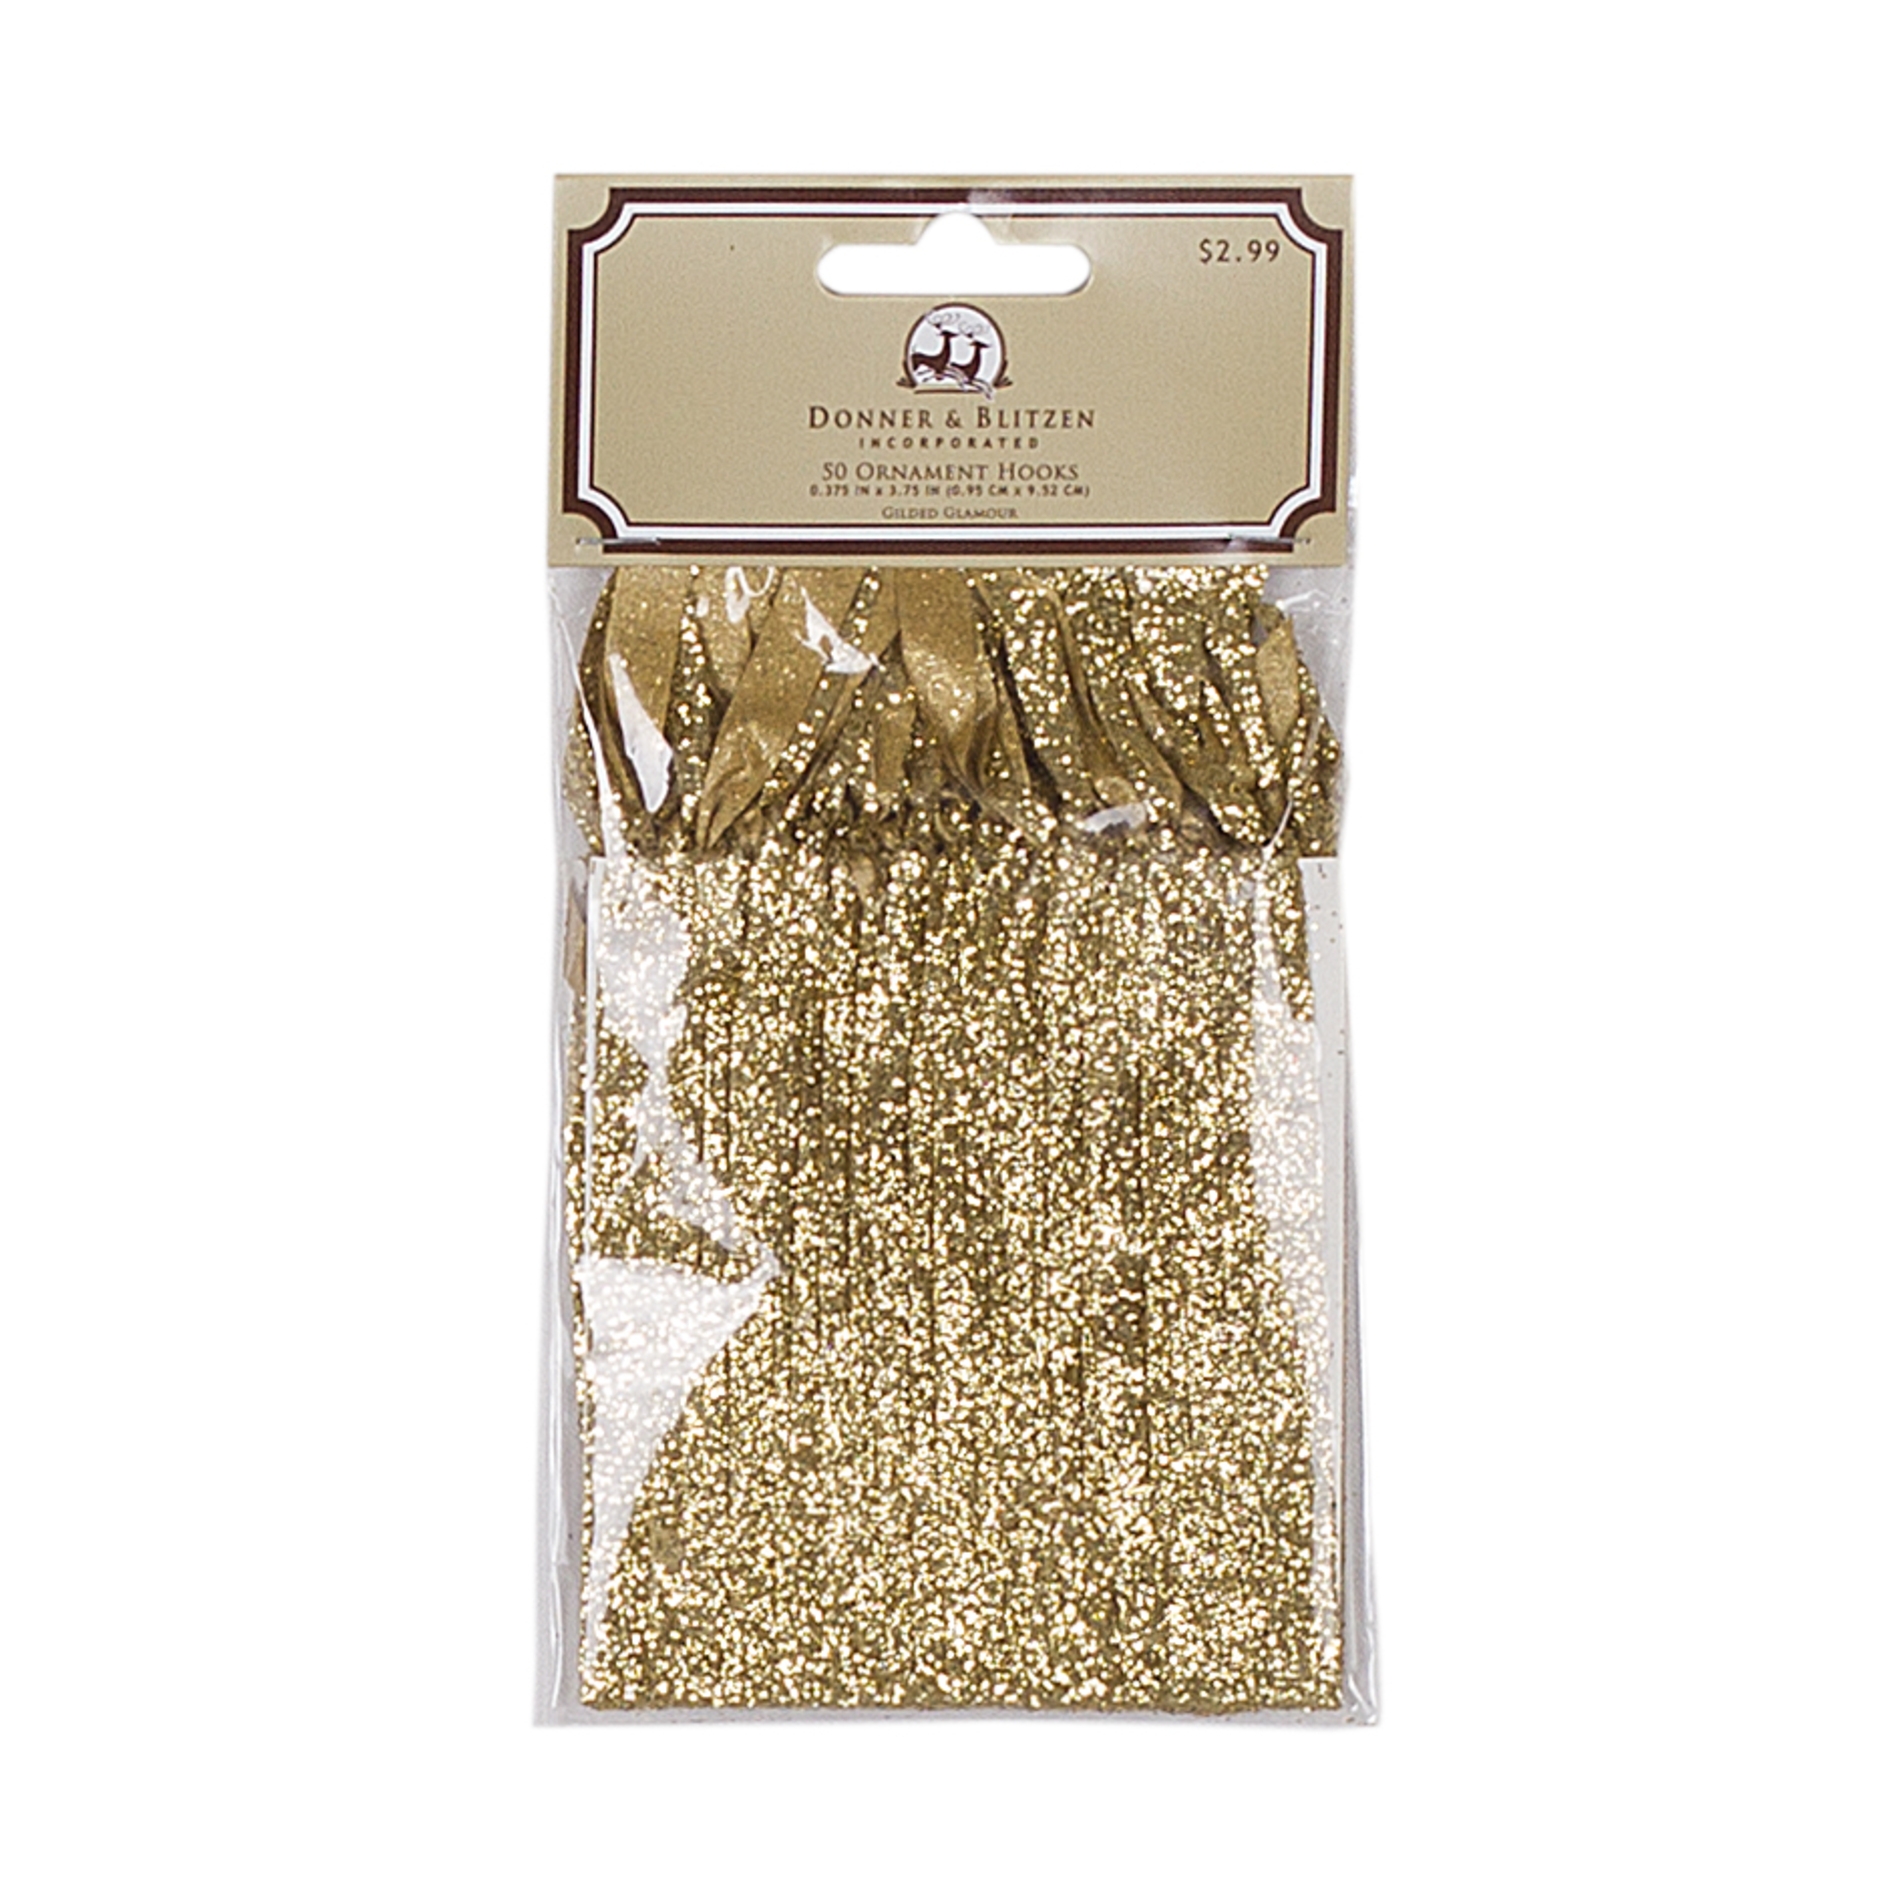 Donner & Blitzen Incorporated 50 ct. Gold Glitter Ribbon Ornament Hangers